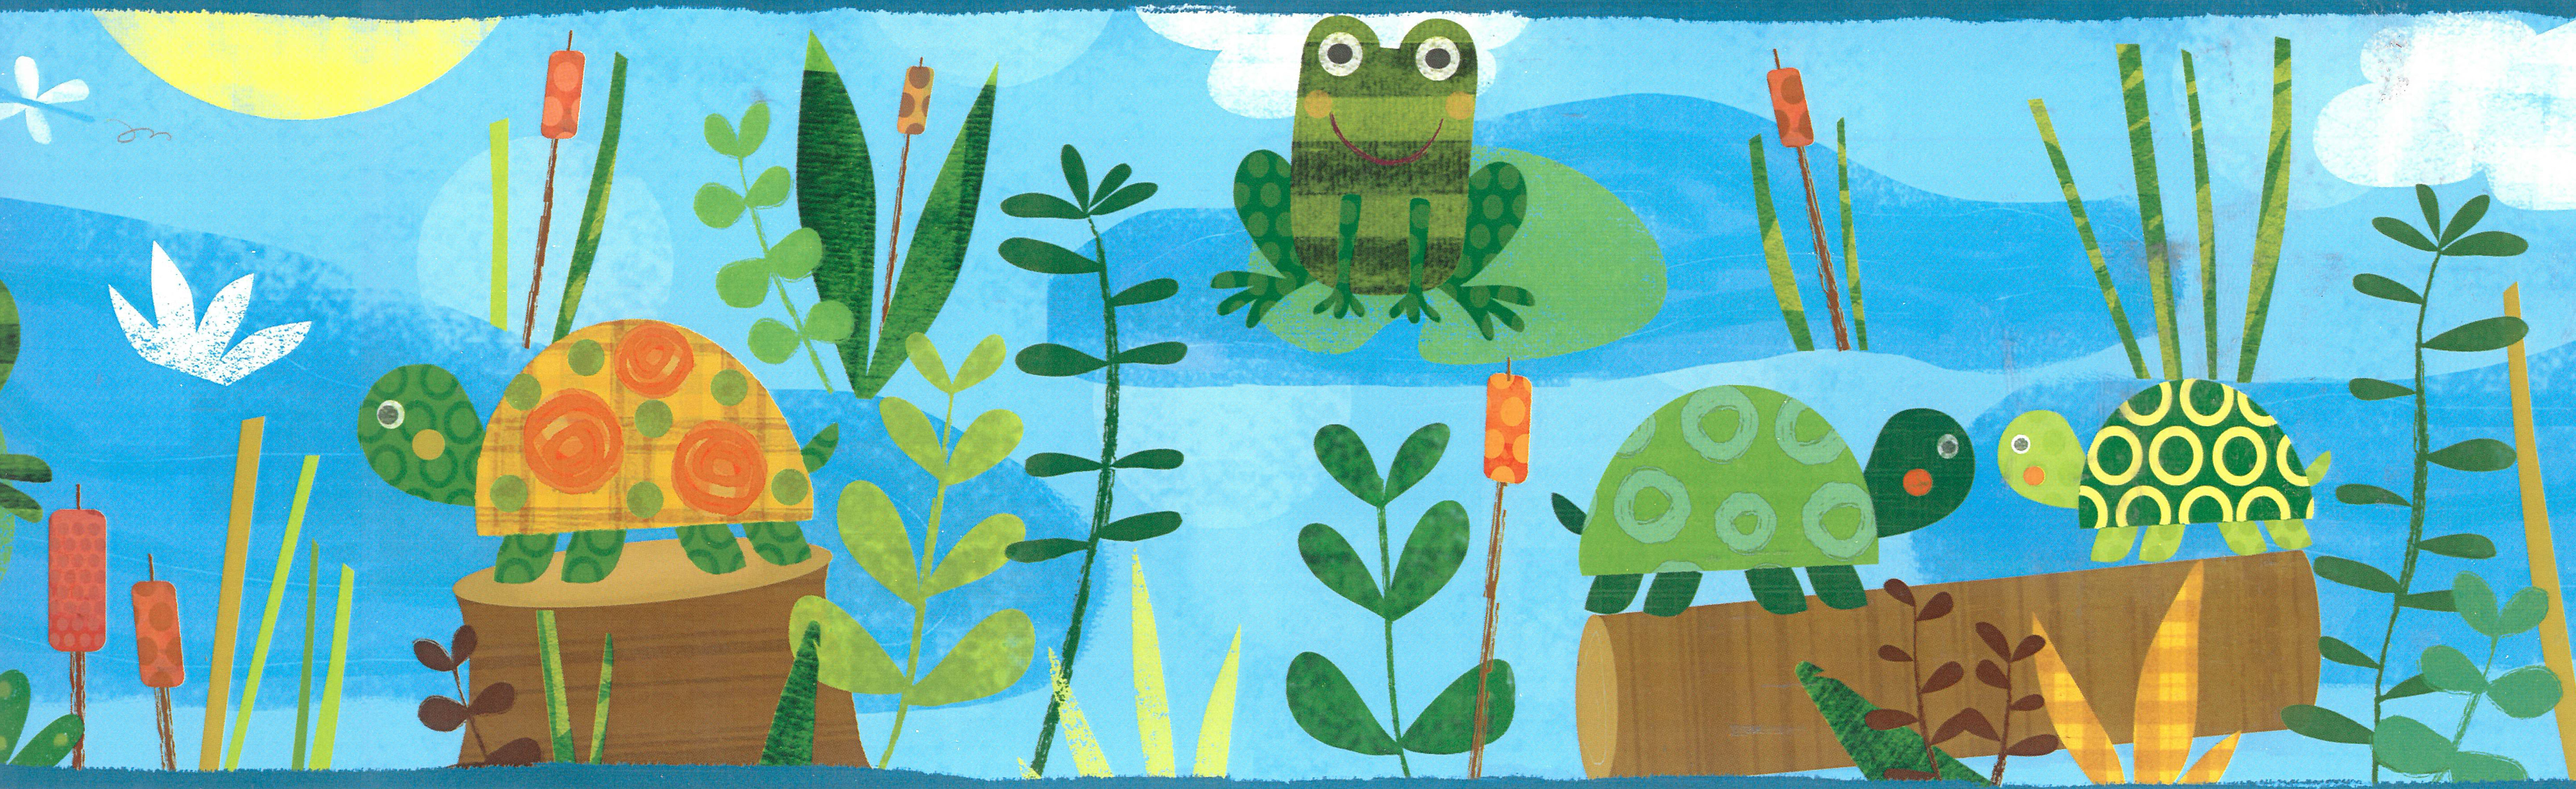 Child's Room/Nursery Reptile Smiles Wallpaper Border Turtles/Lizards/Frogs